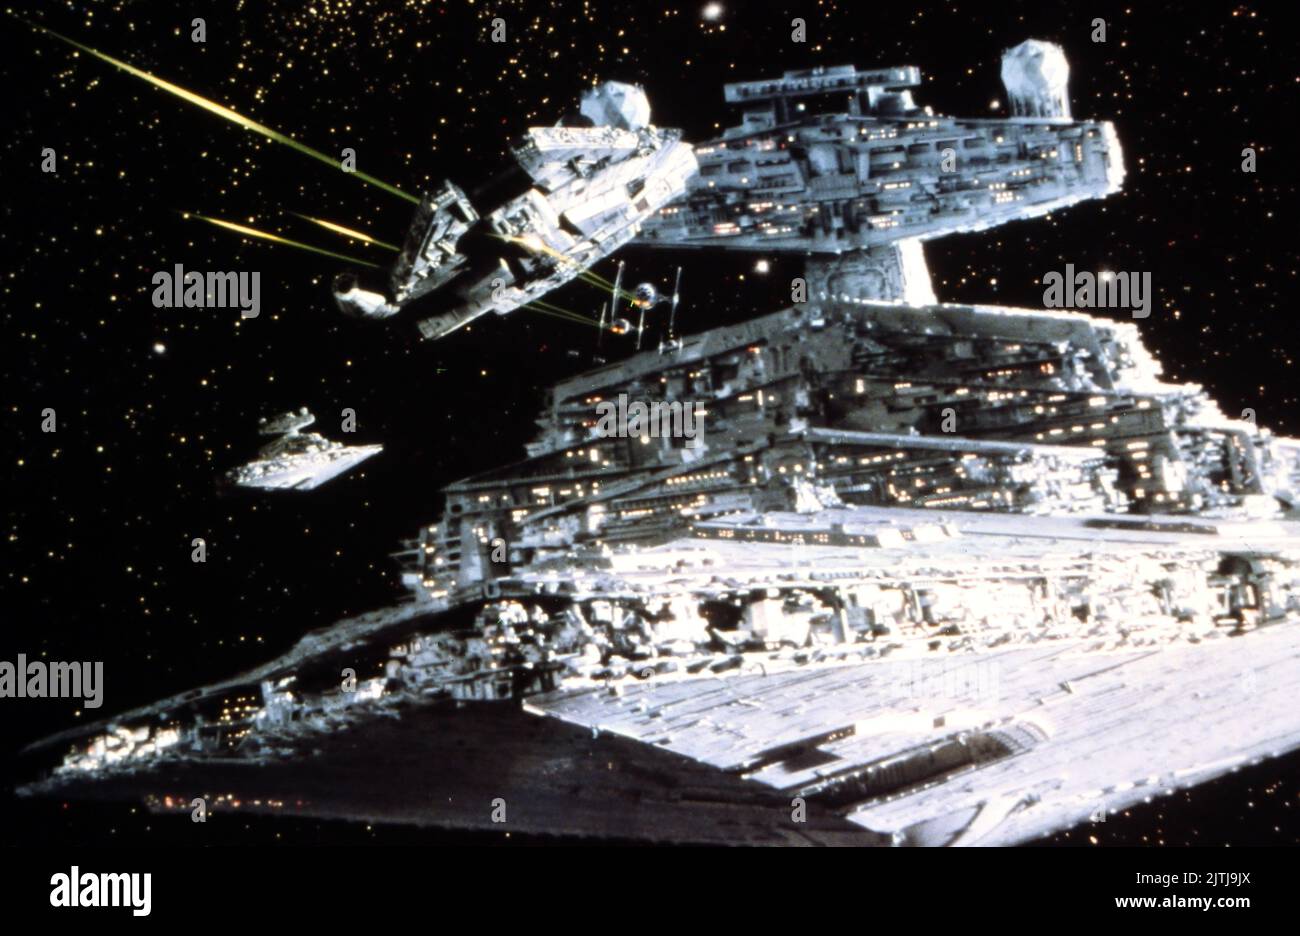 Star Wars, aka Krieg der Sterne, USA 1977, Regie: George Lucas, Szenenfoto im Weltraum Foto Stock